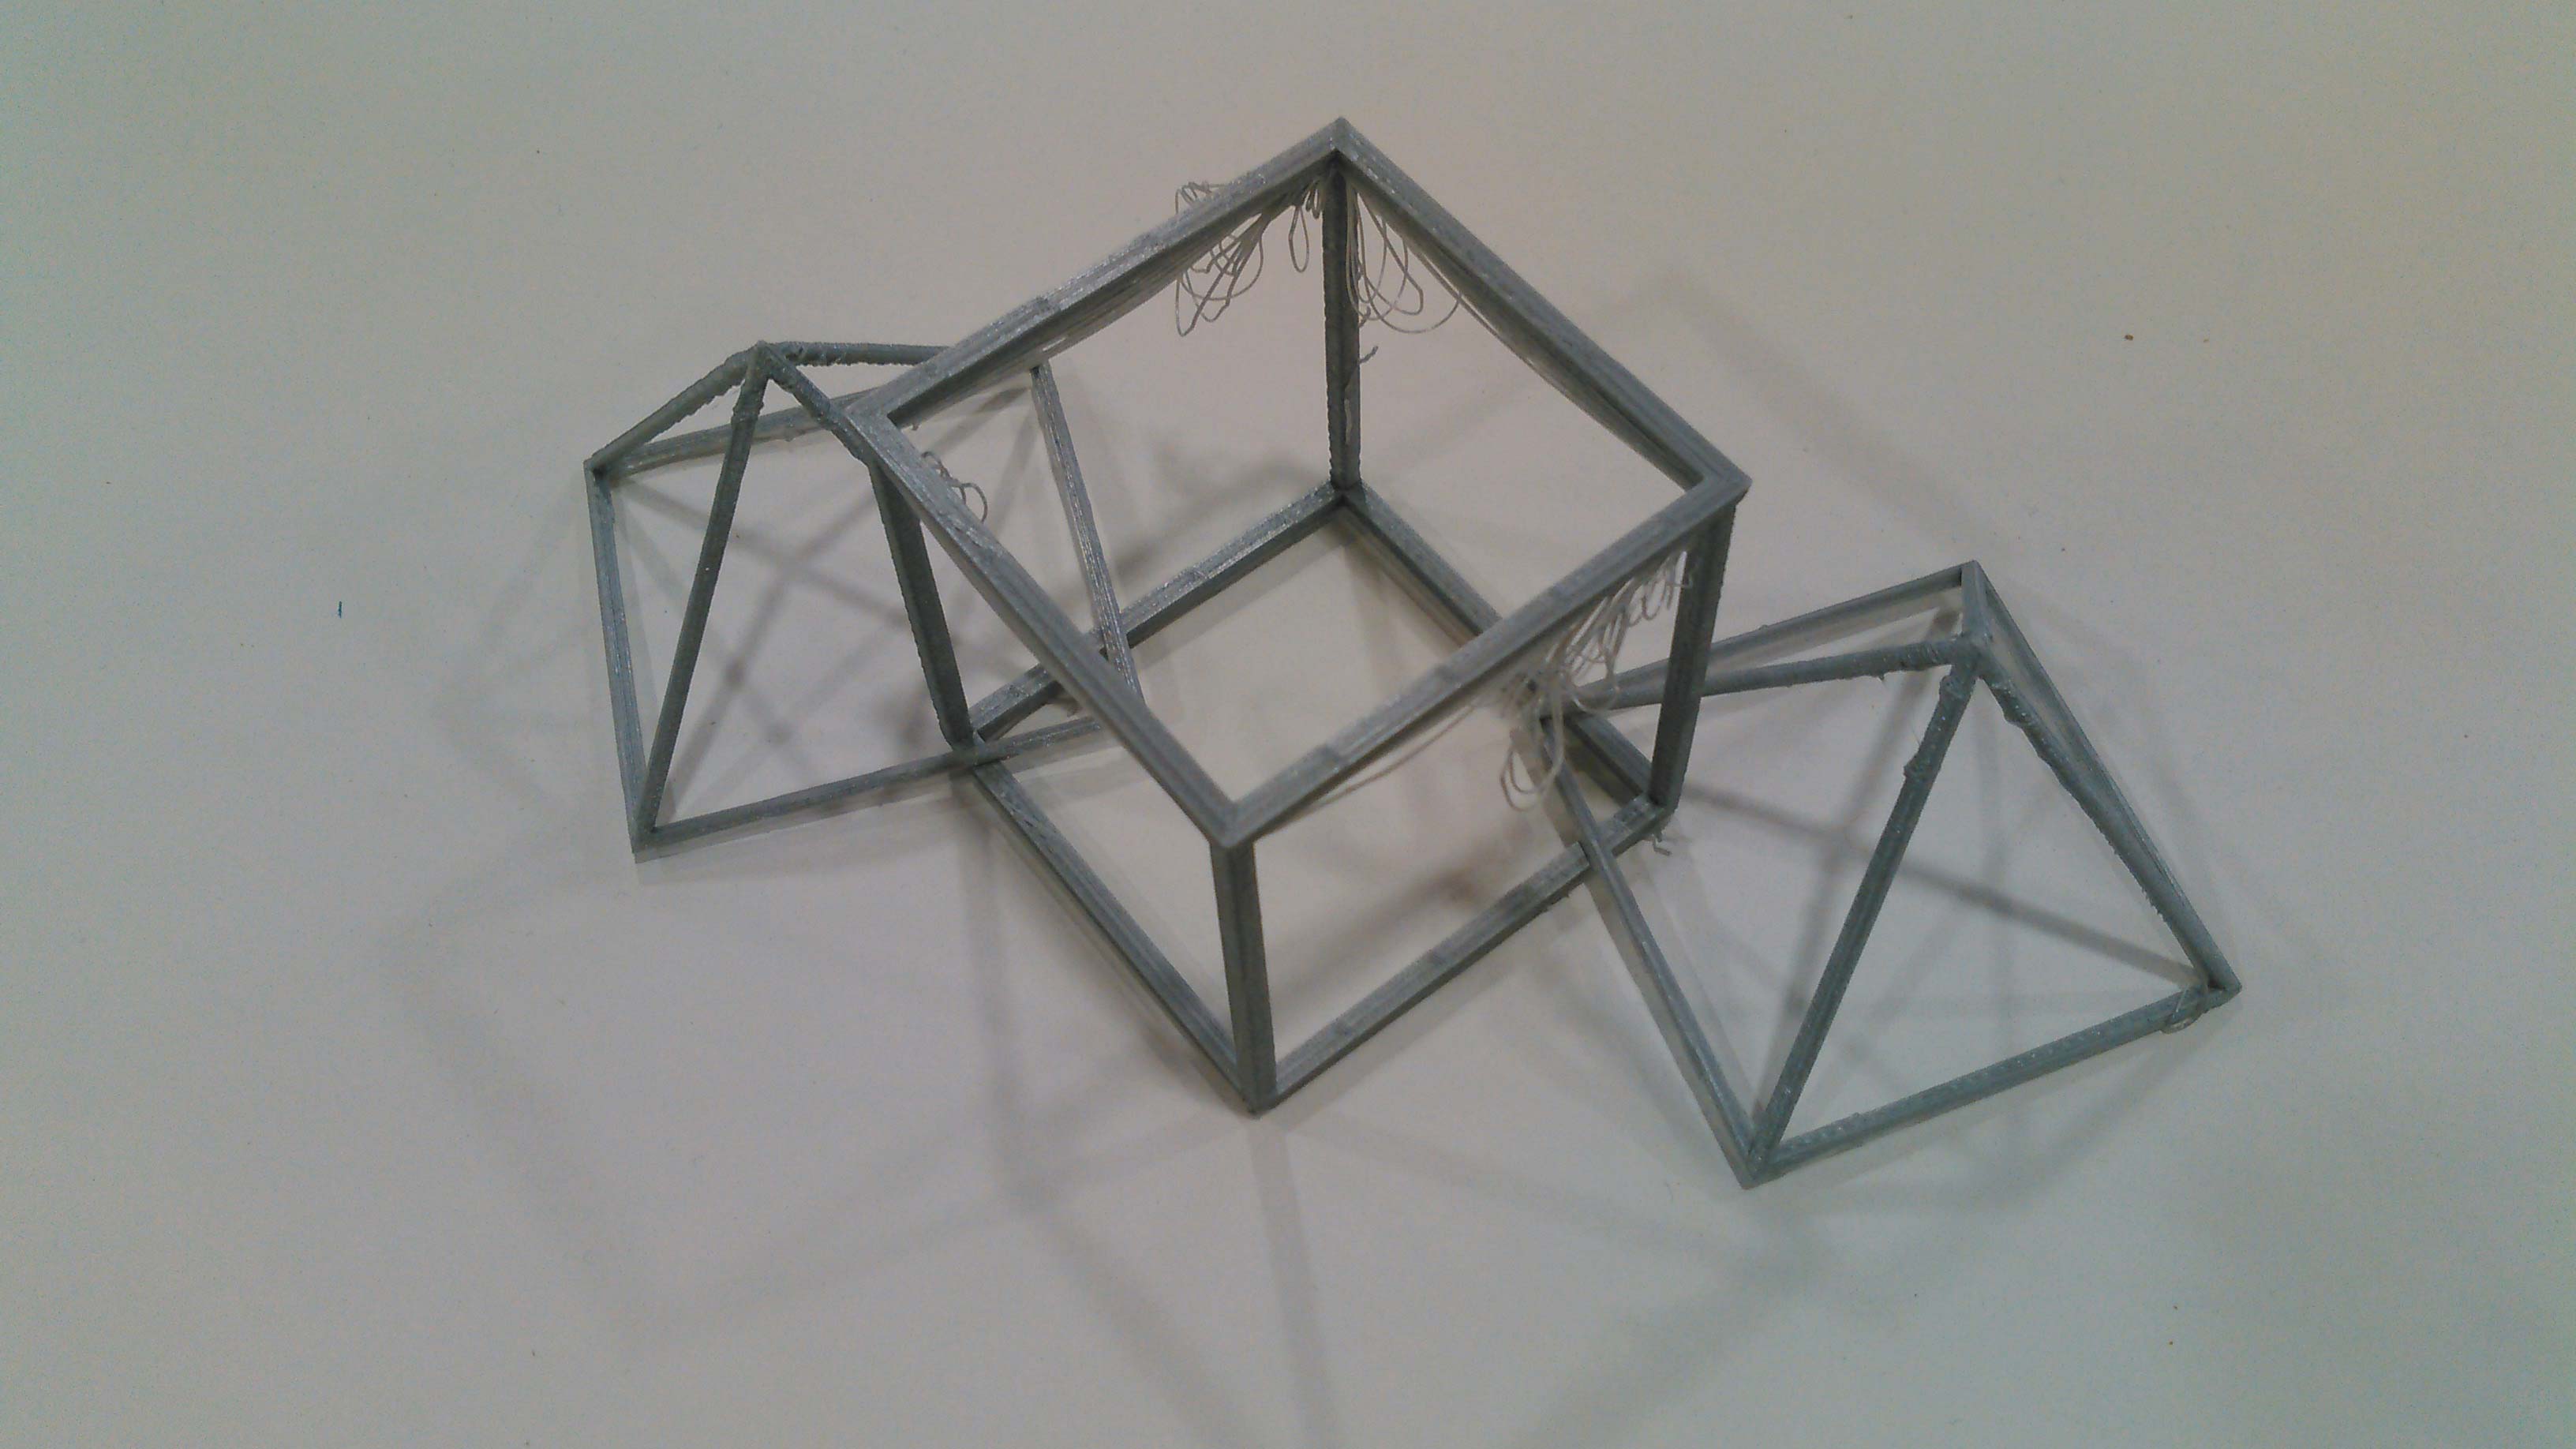 3D printed cube pyramids